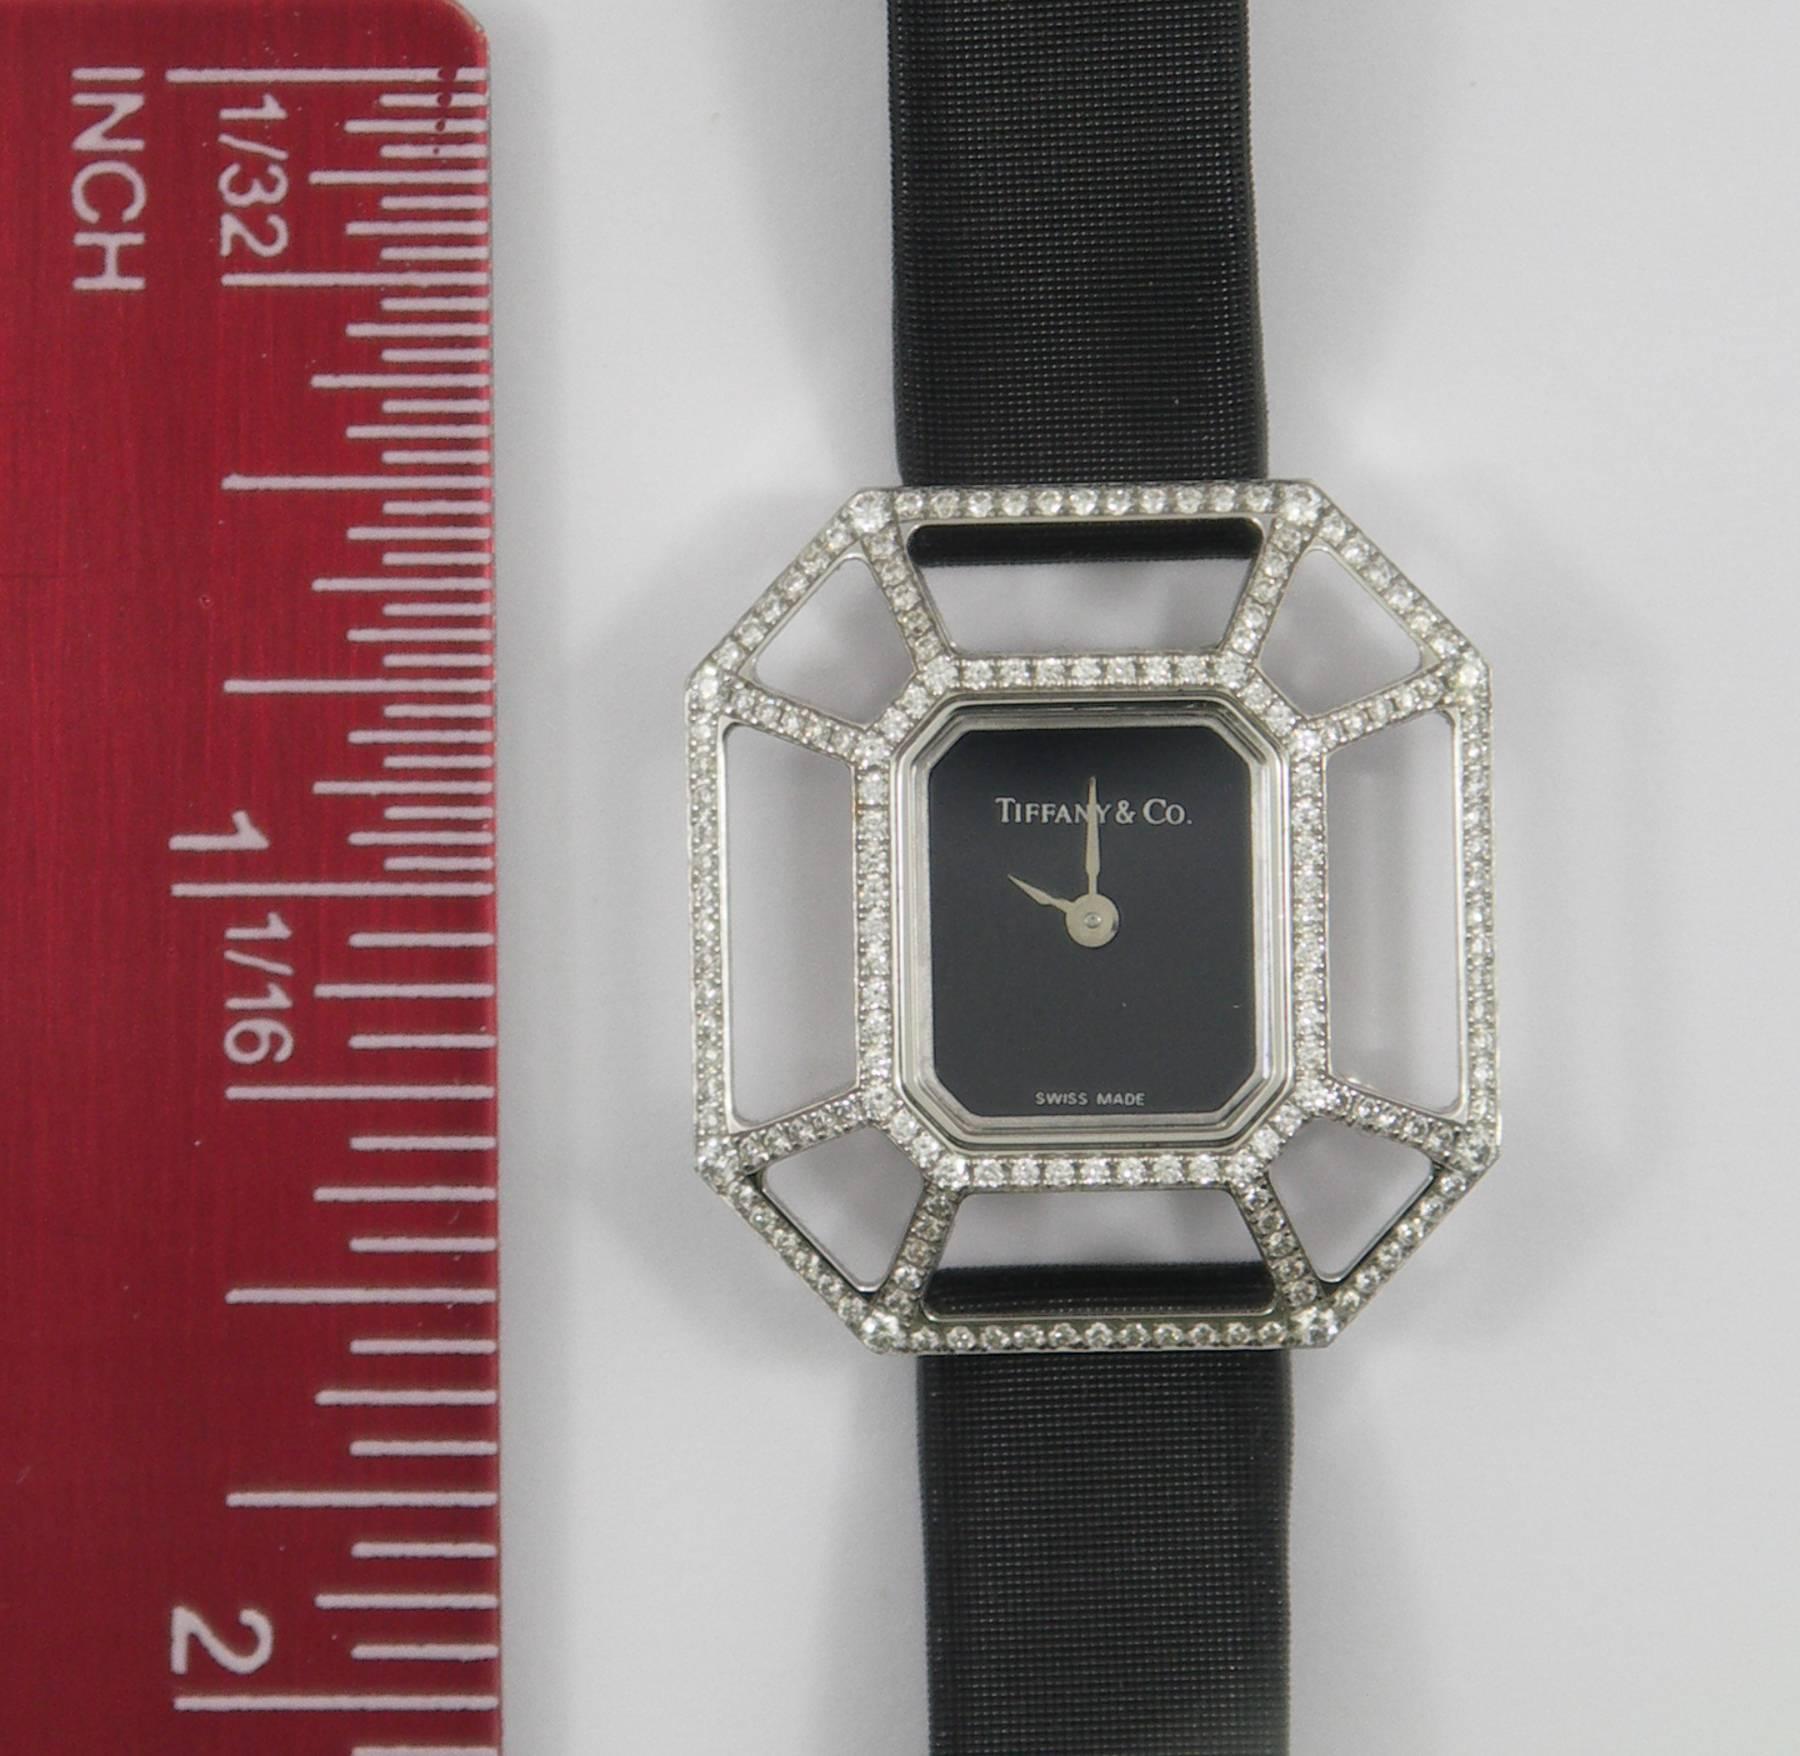 Tiffany & Co. Paloma Picasso Ladies White Gold Diamond PuzzleWatch Wristwatch 4